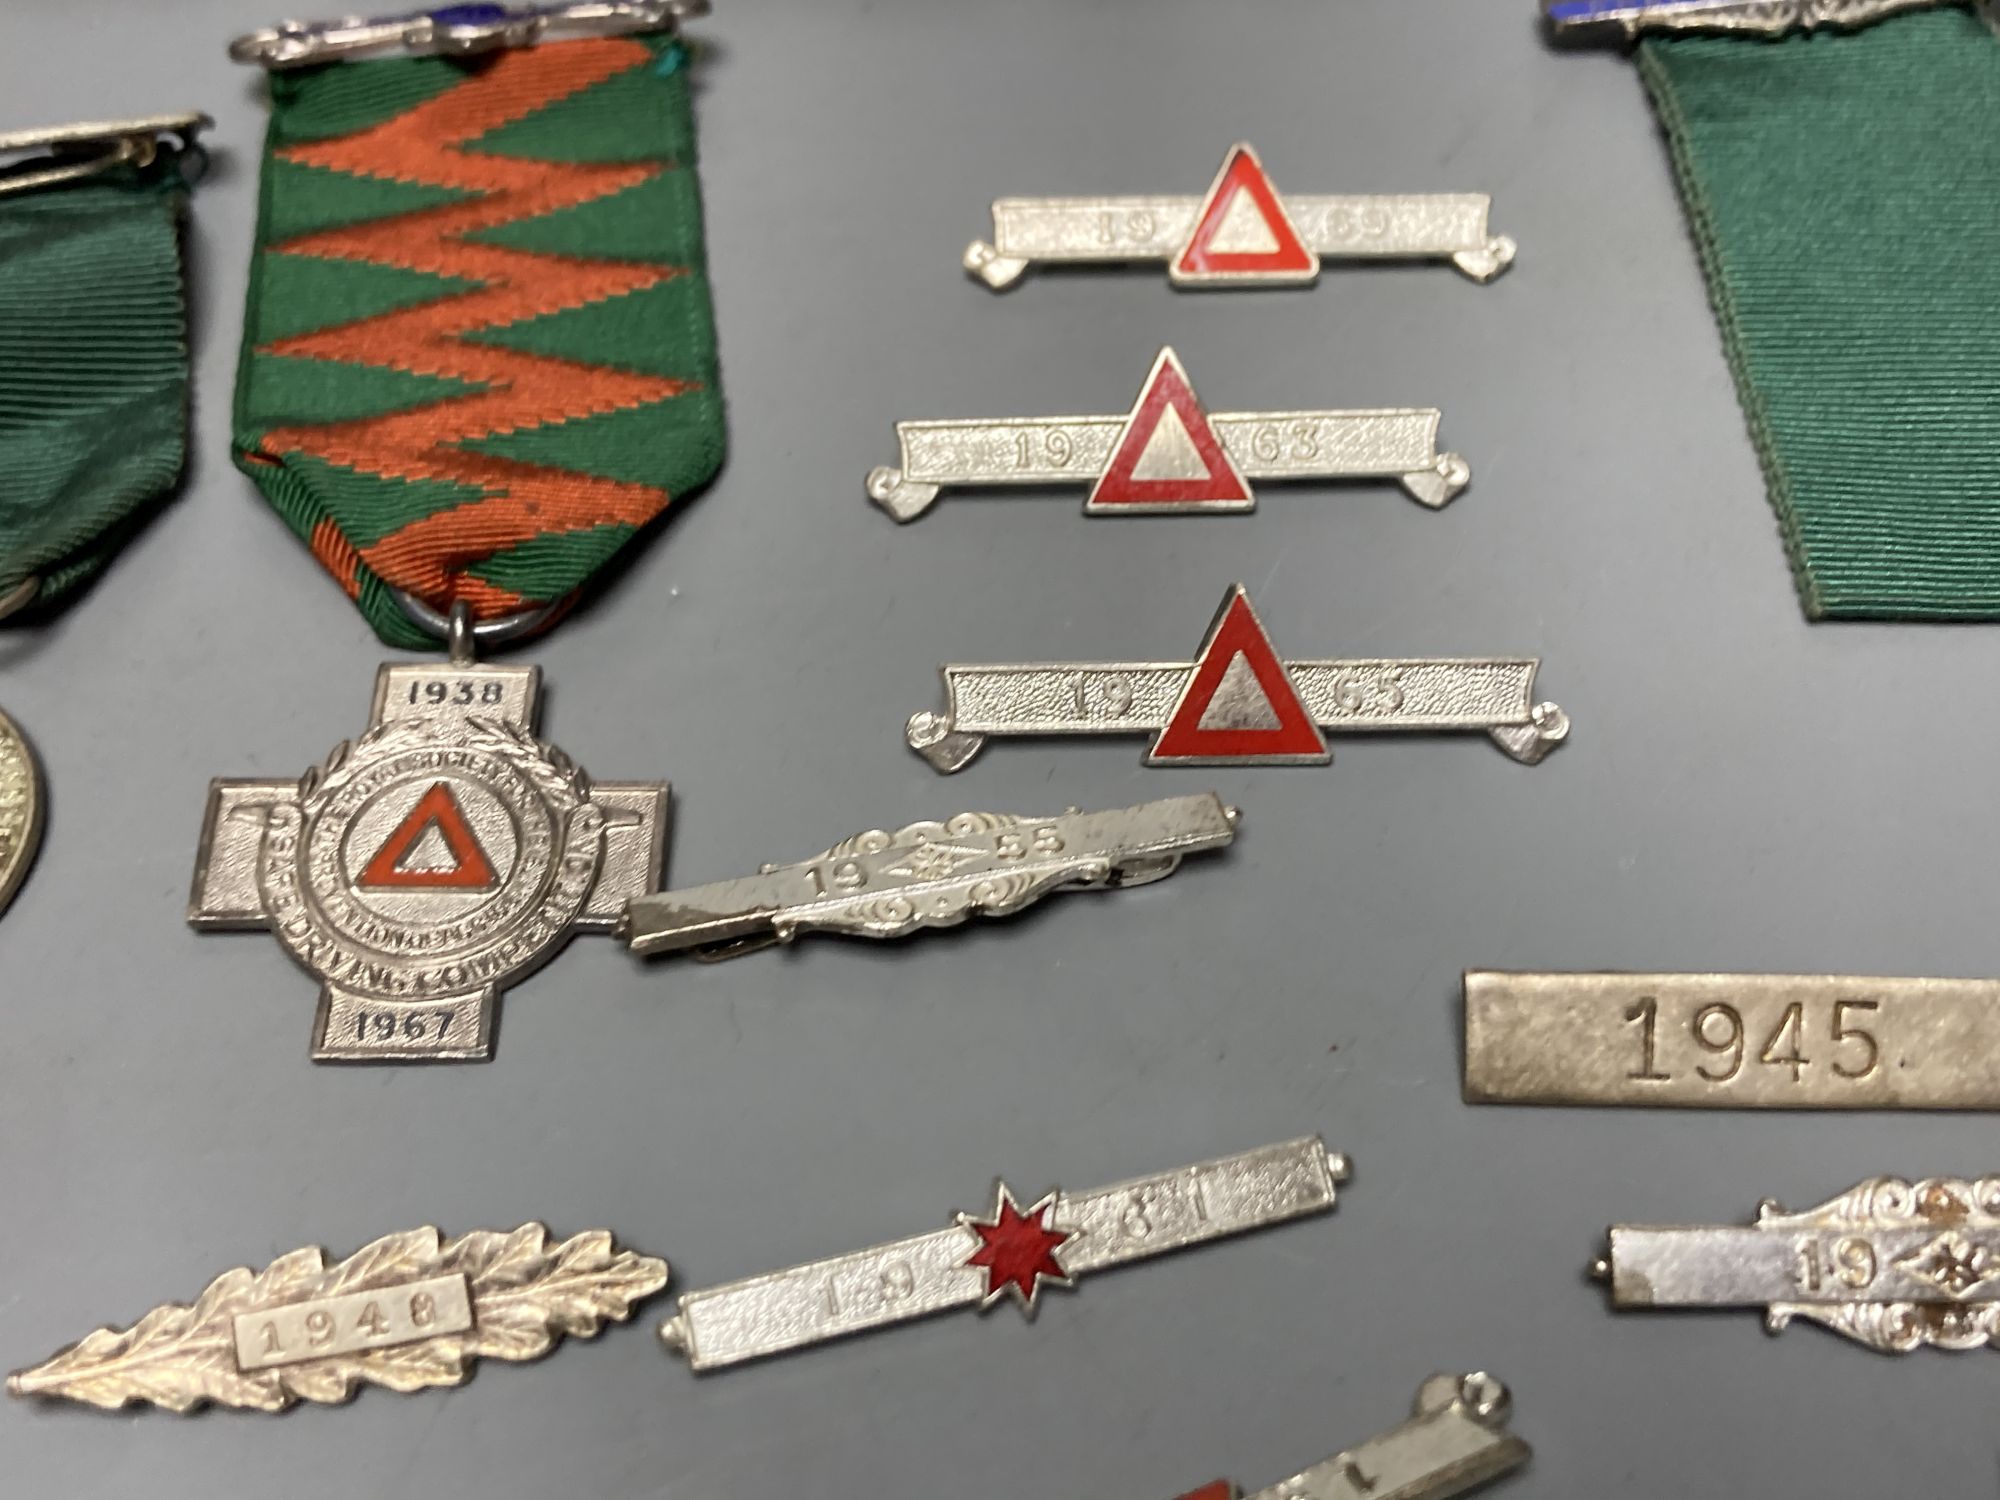 A quantity of assorted medals